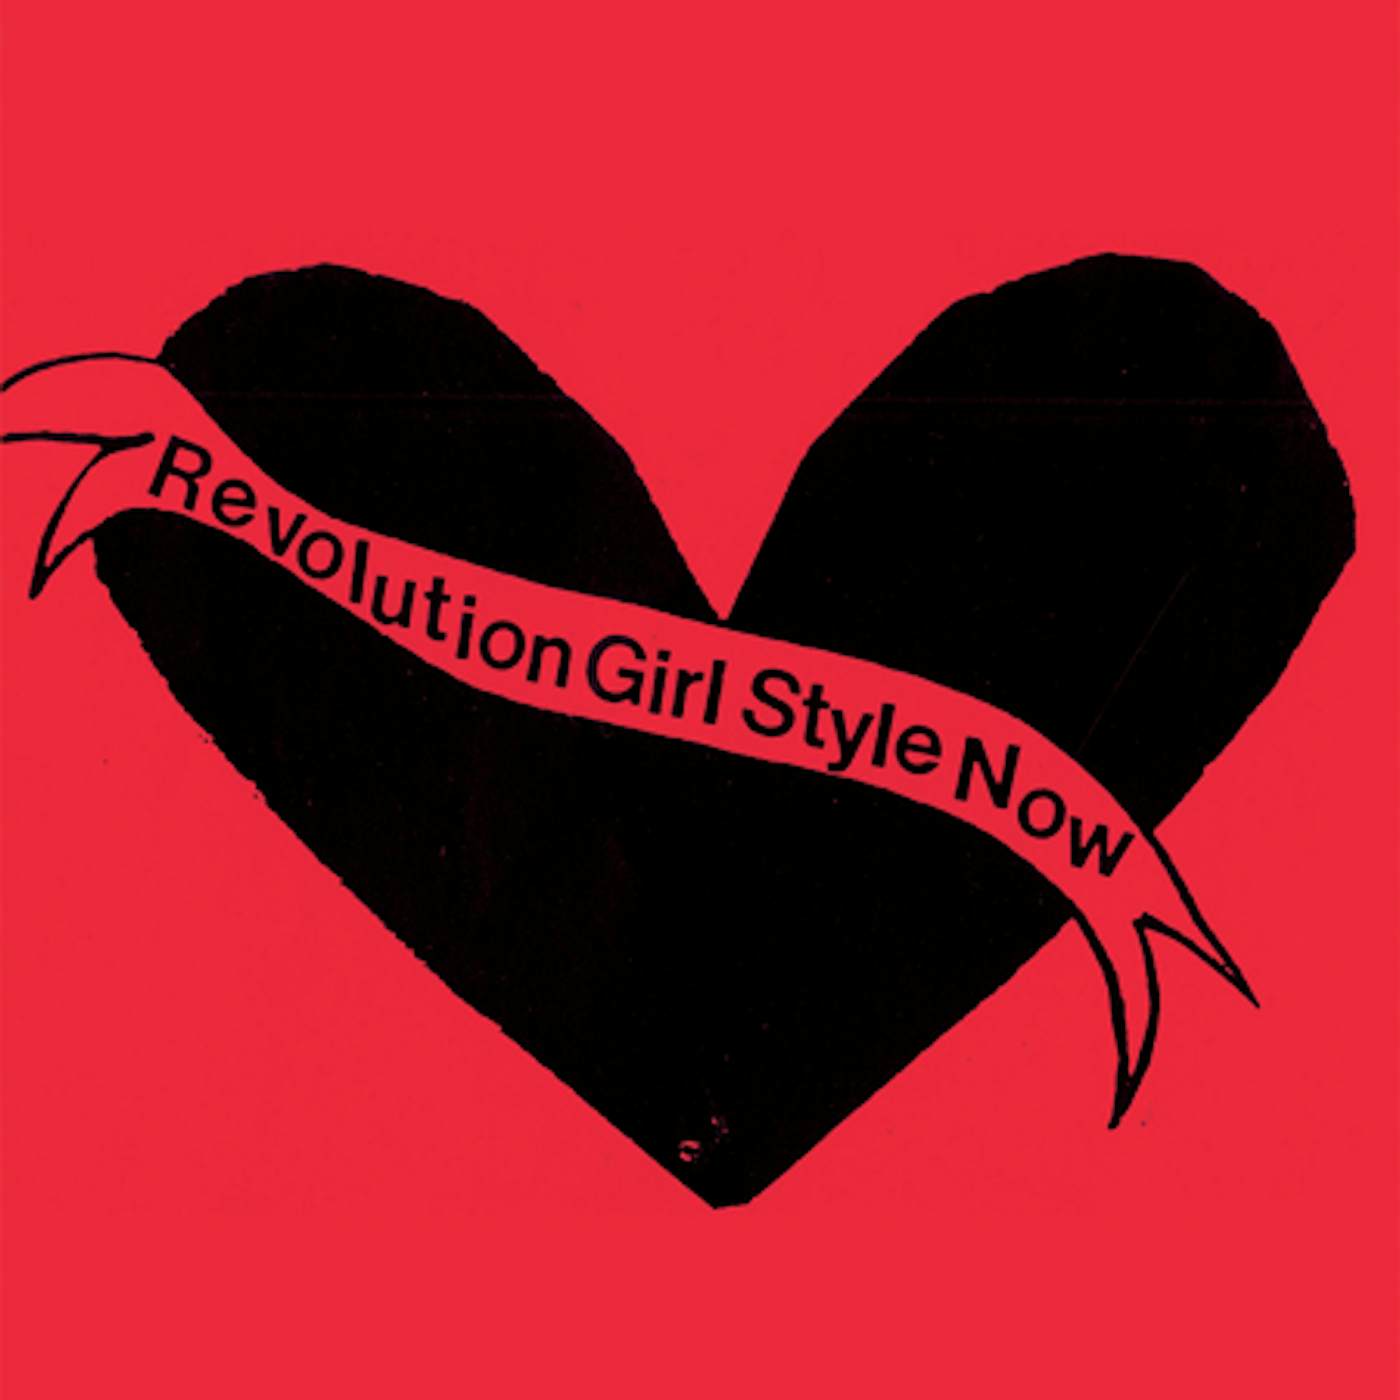 Bikini Kill REVOLUTION GIRL STYLE NOW CD